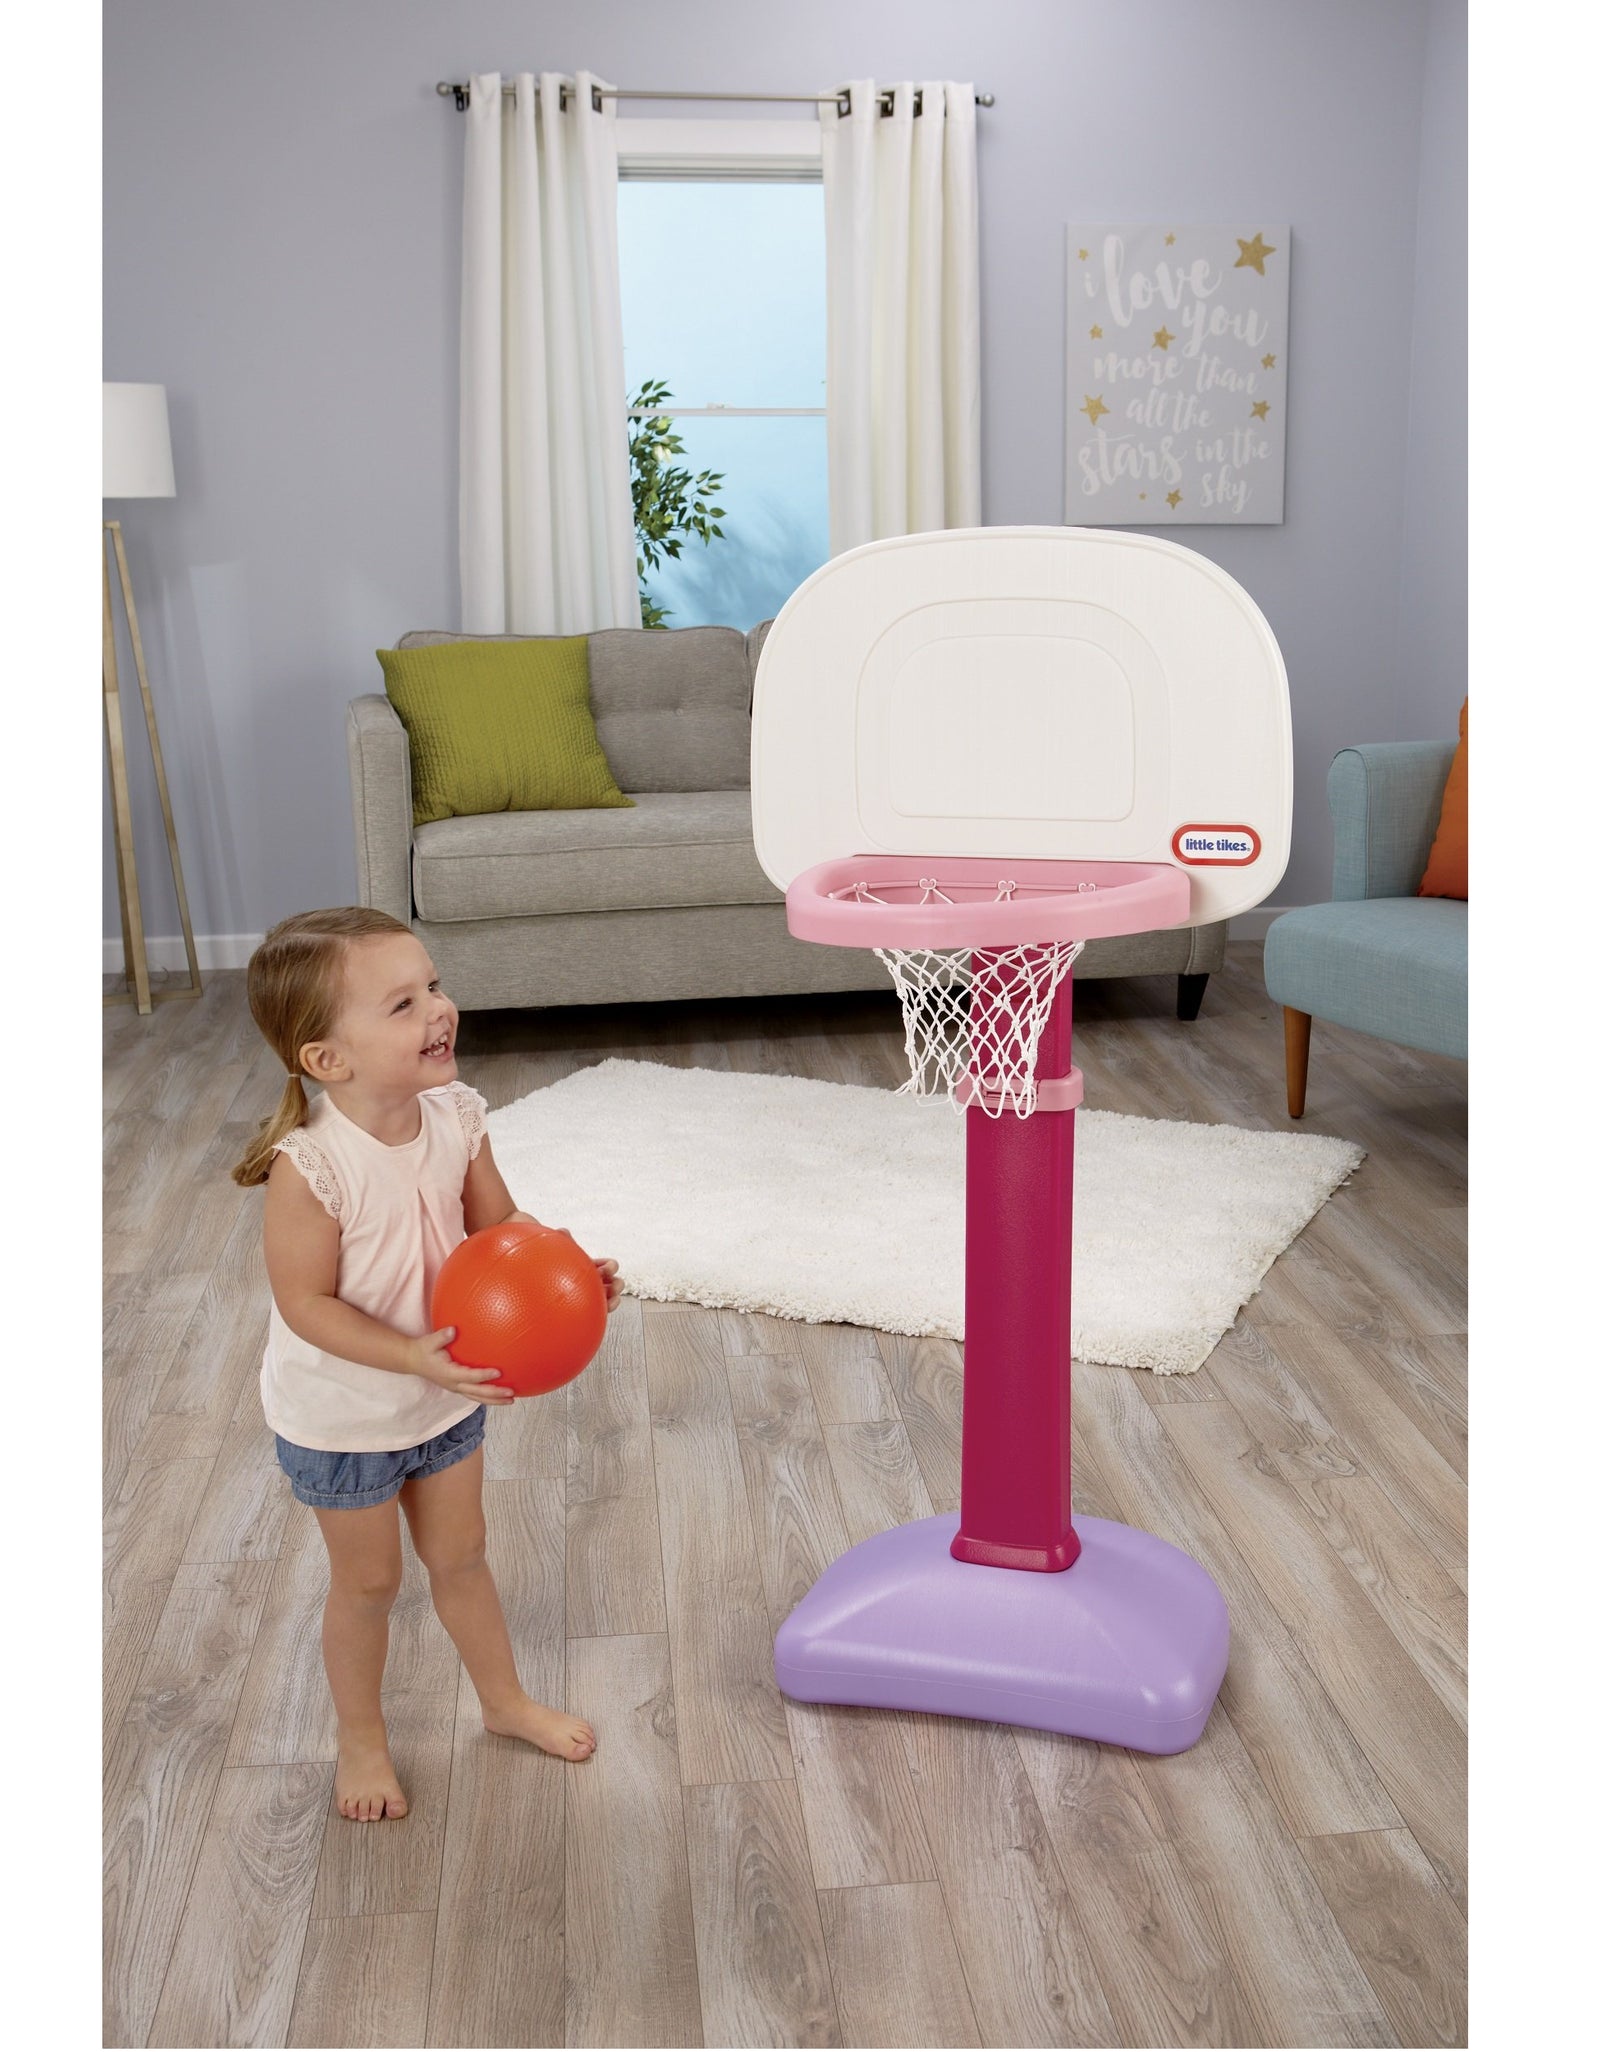 Little Tikes Easy Score Basketball Set, Pink, 3 Balls - Amazon Exclusive